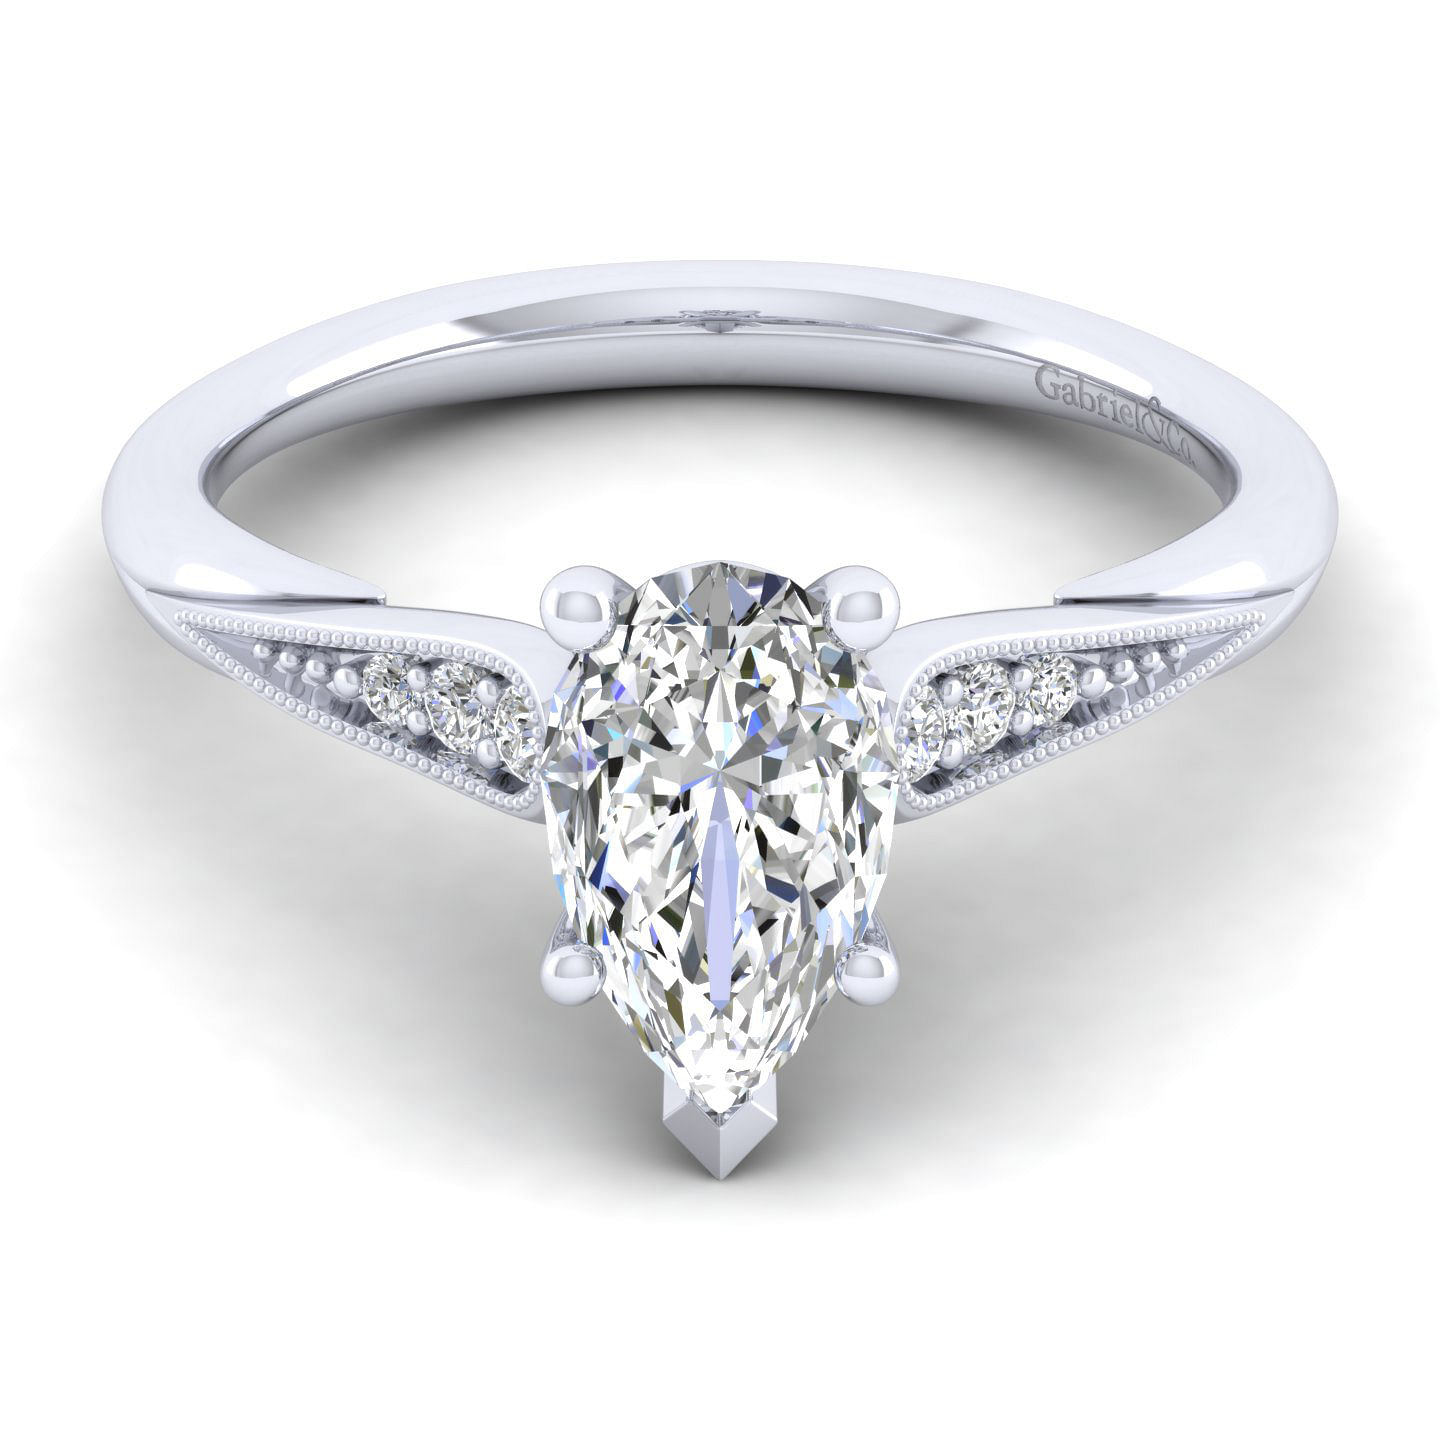 Riley - 14K White Gold Pear Shape Diamond Engagement Ring